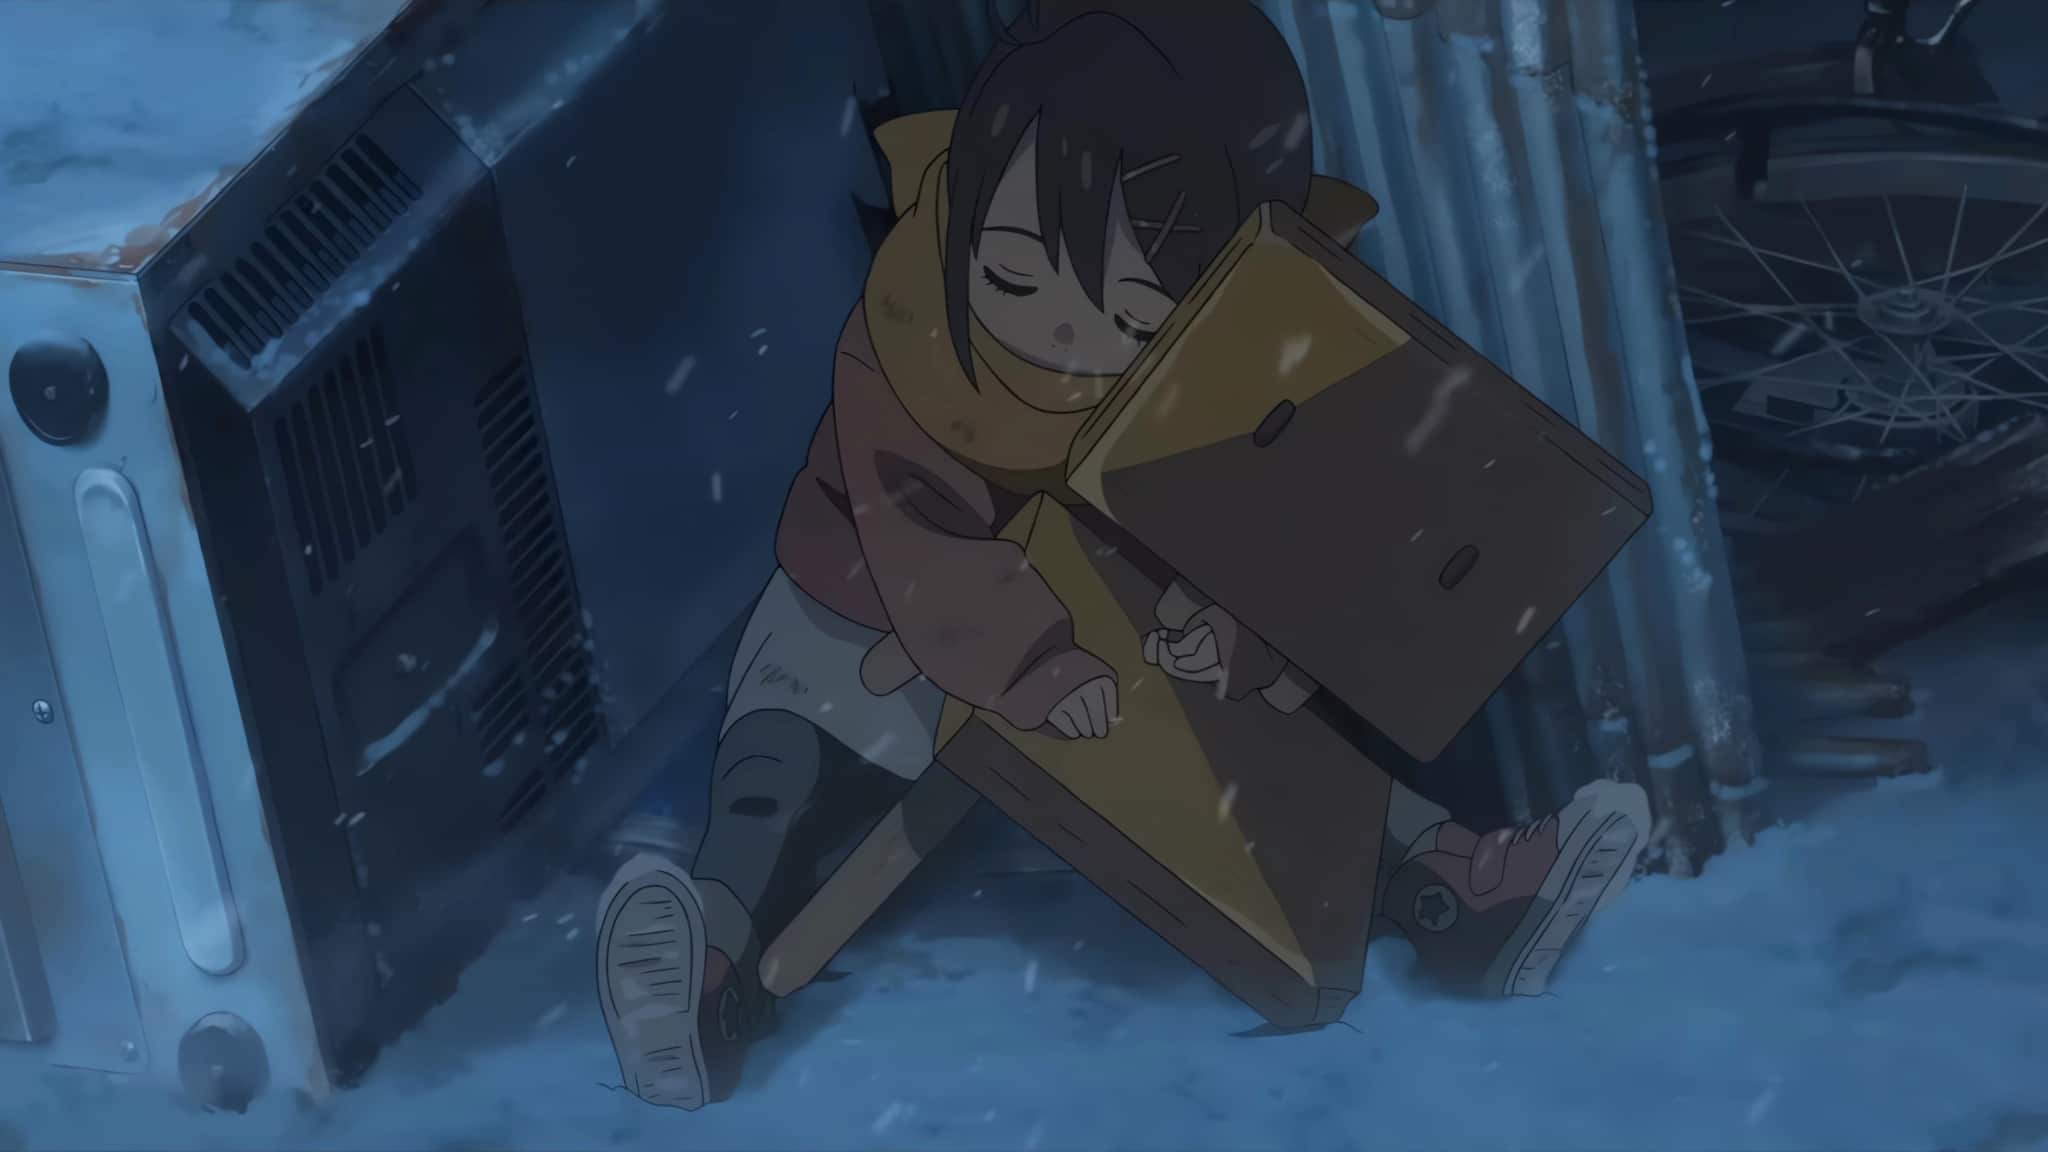 Suzume enfant, dans le film Suzume de Makoto Shinkai